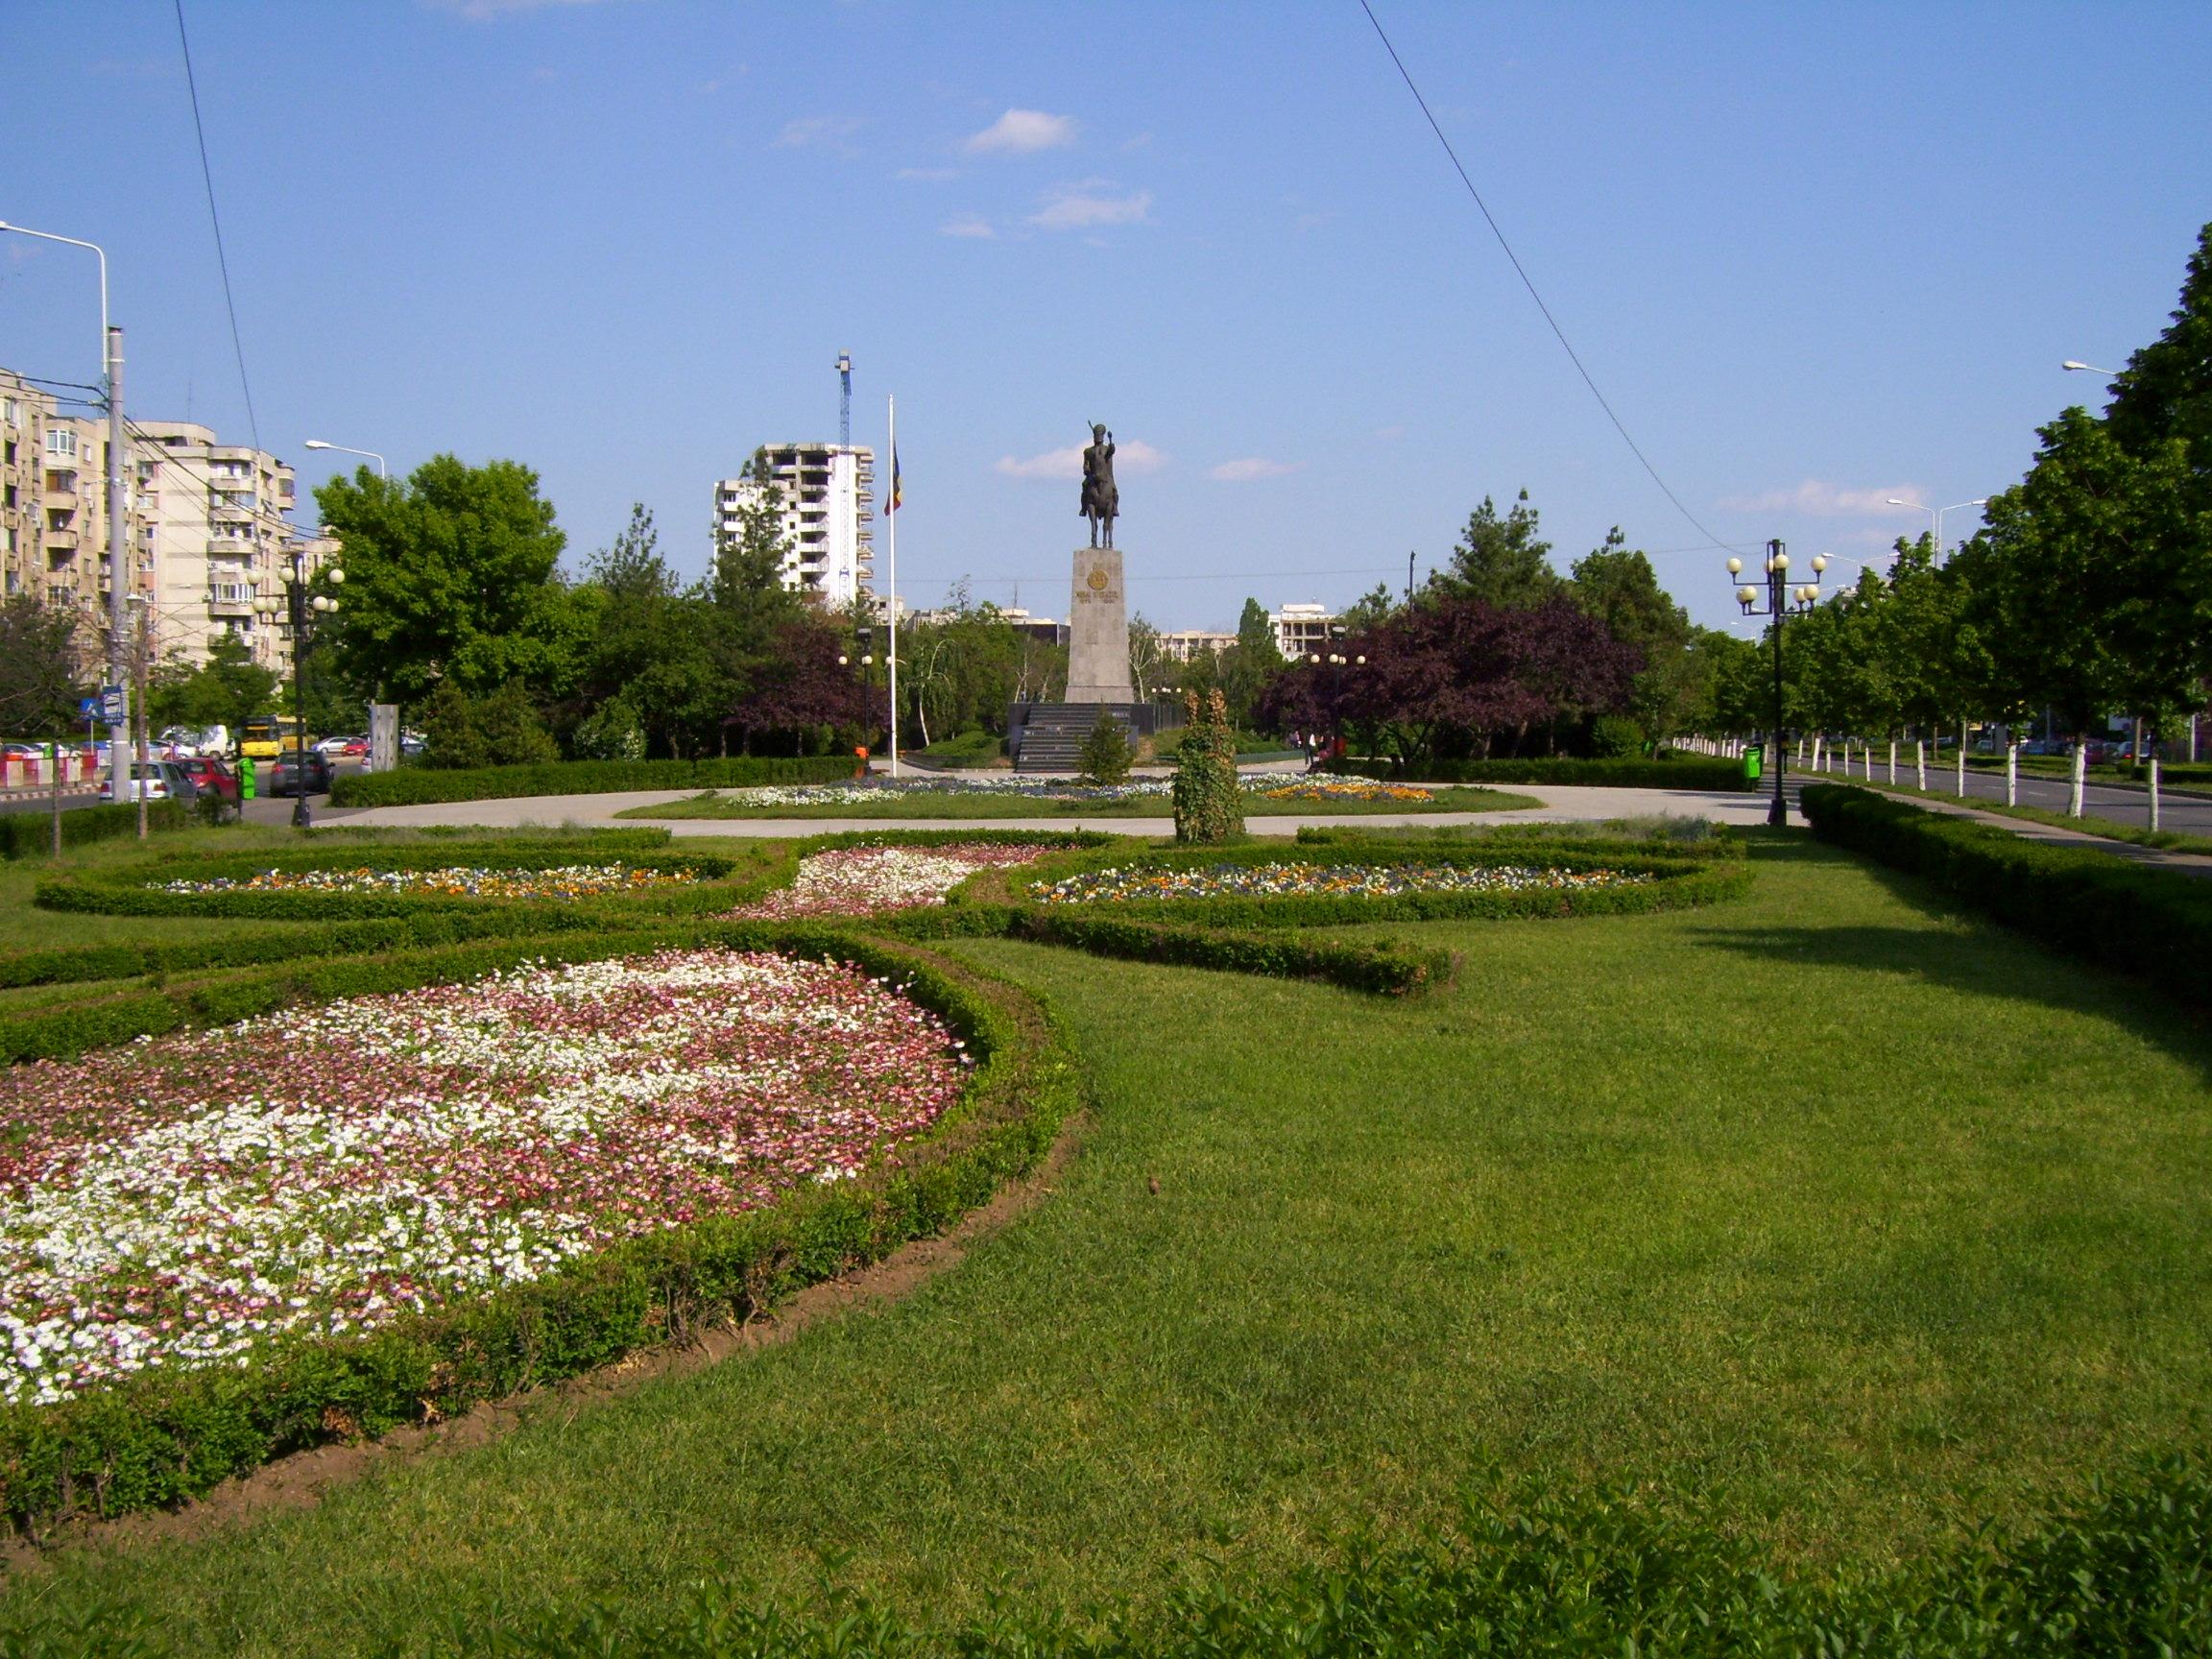 Cover image of this place Parcul Mihai Viteazul